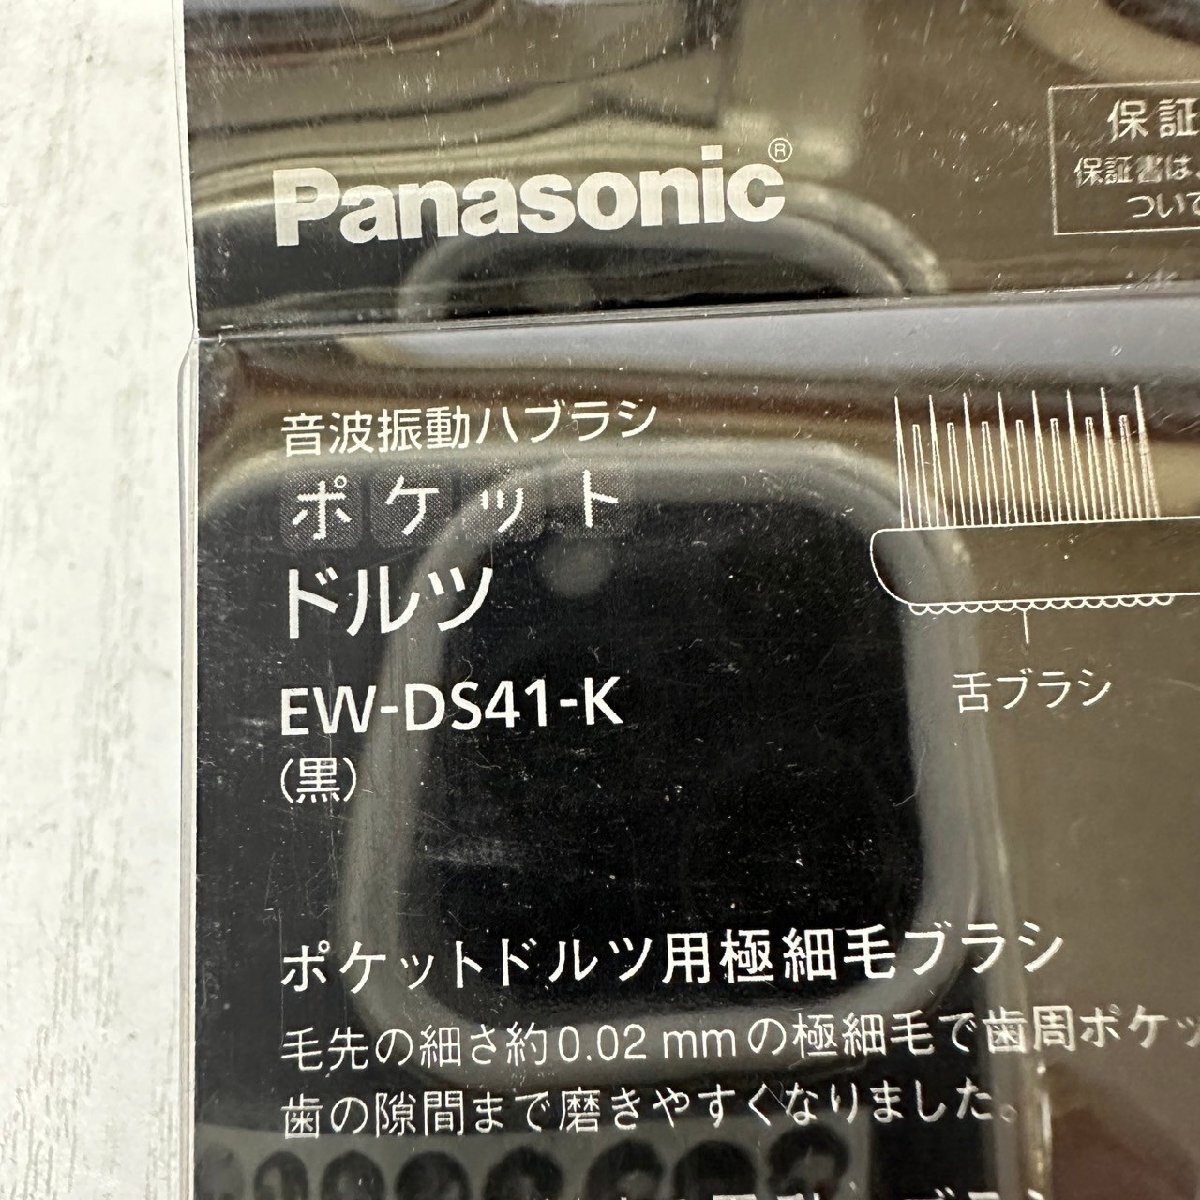 Panasonic EW-DS41-K 音波振動ハブラシ ポケットドルツ 6213_画像3